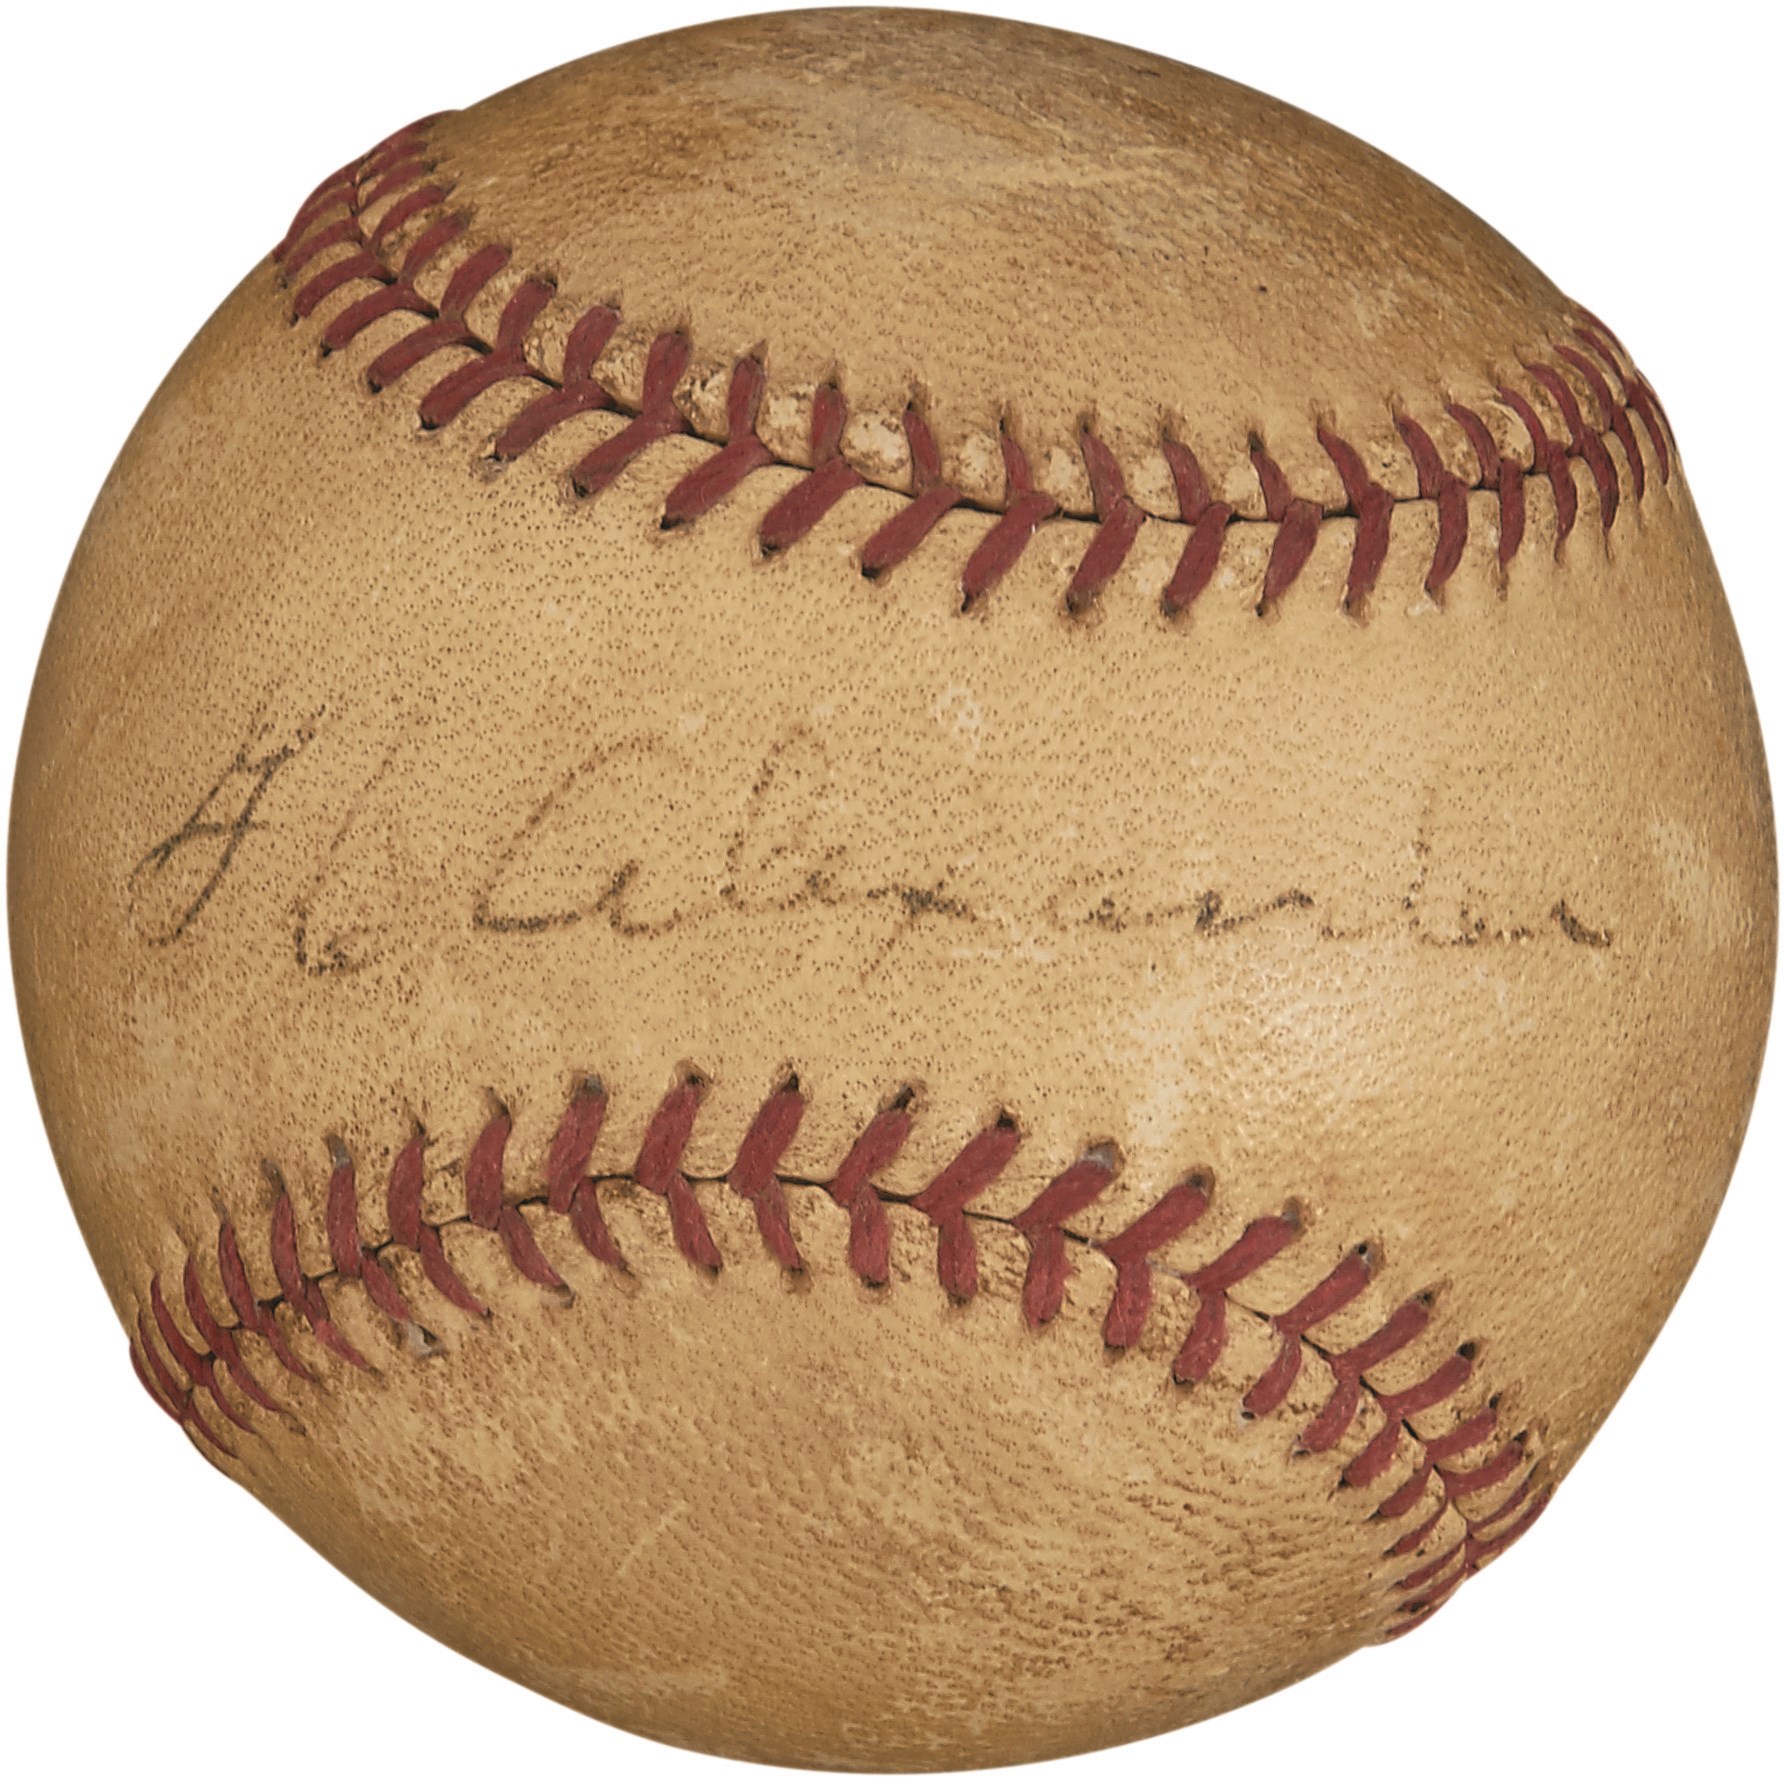 Baseball Autographs - Grover Cleveland Alexander Single-Signed Baseball (PSA)